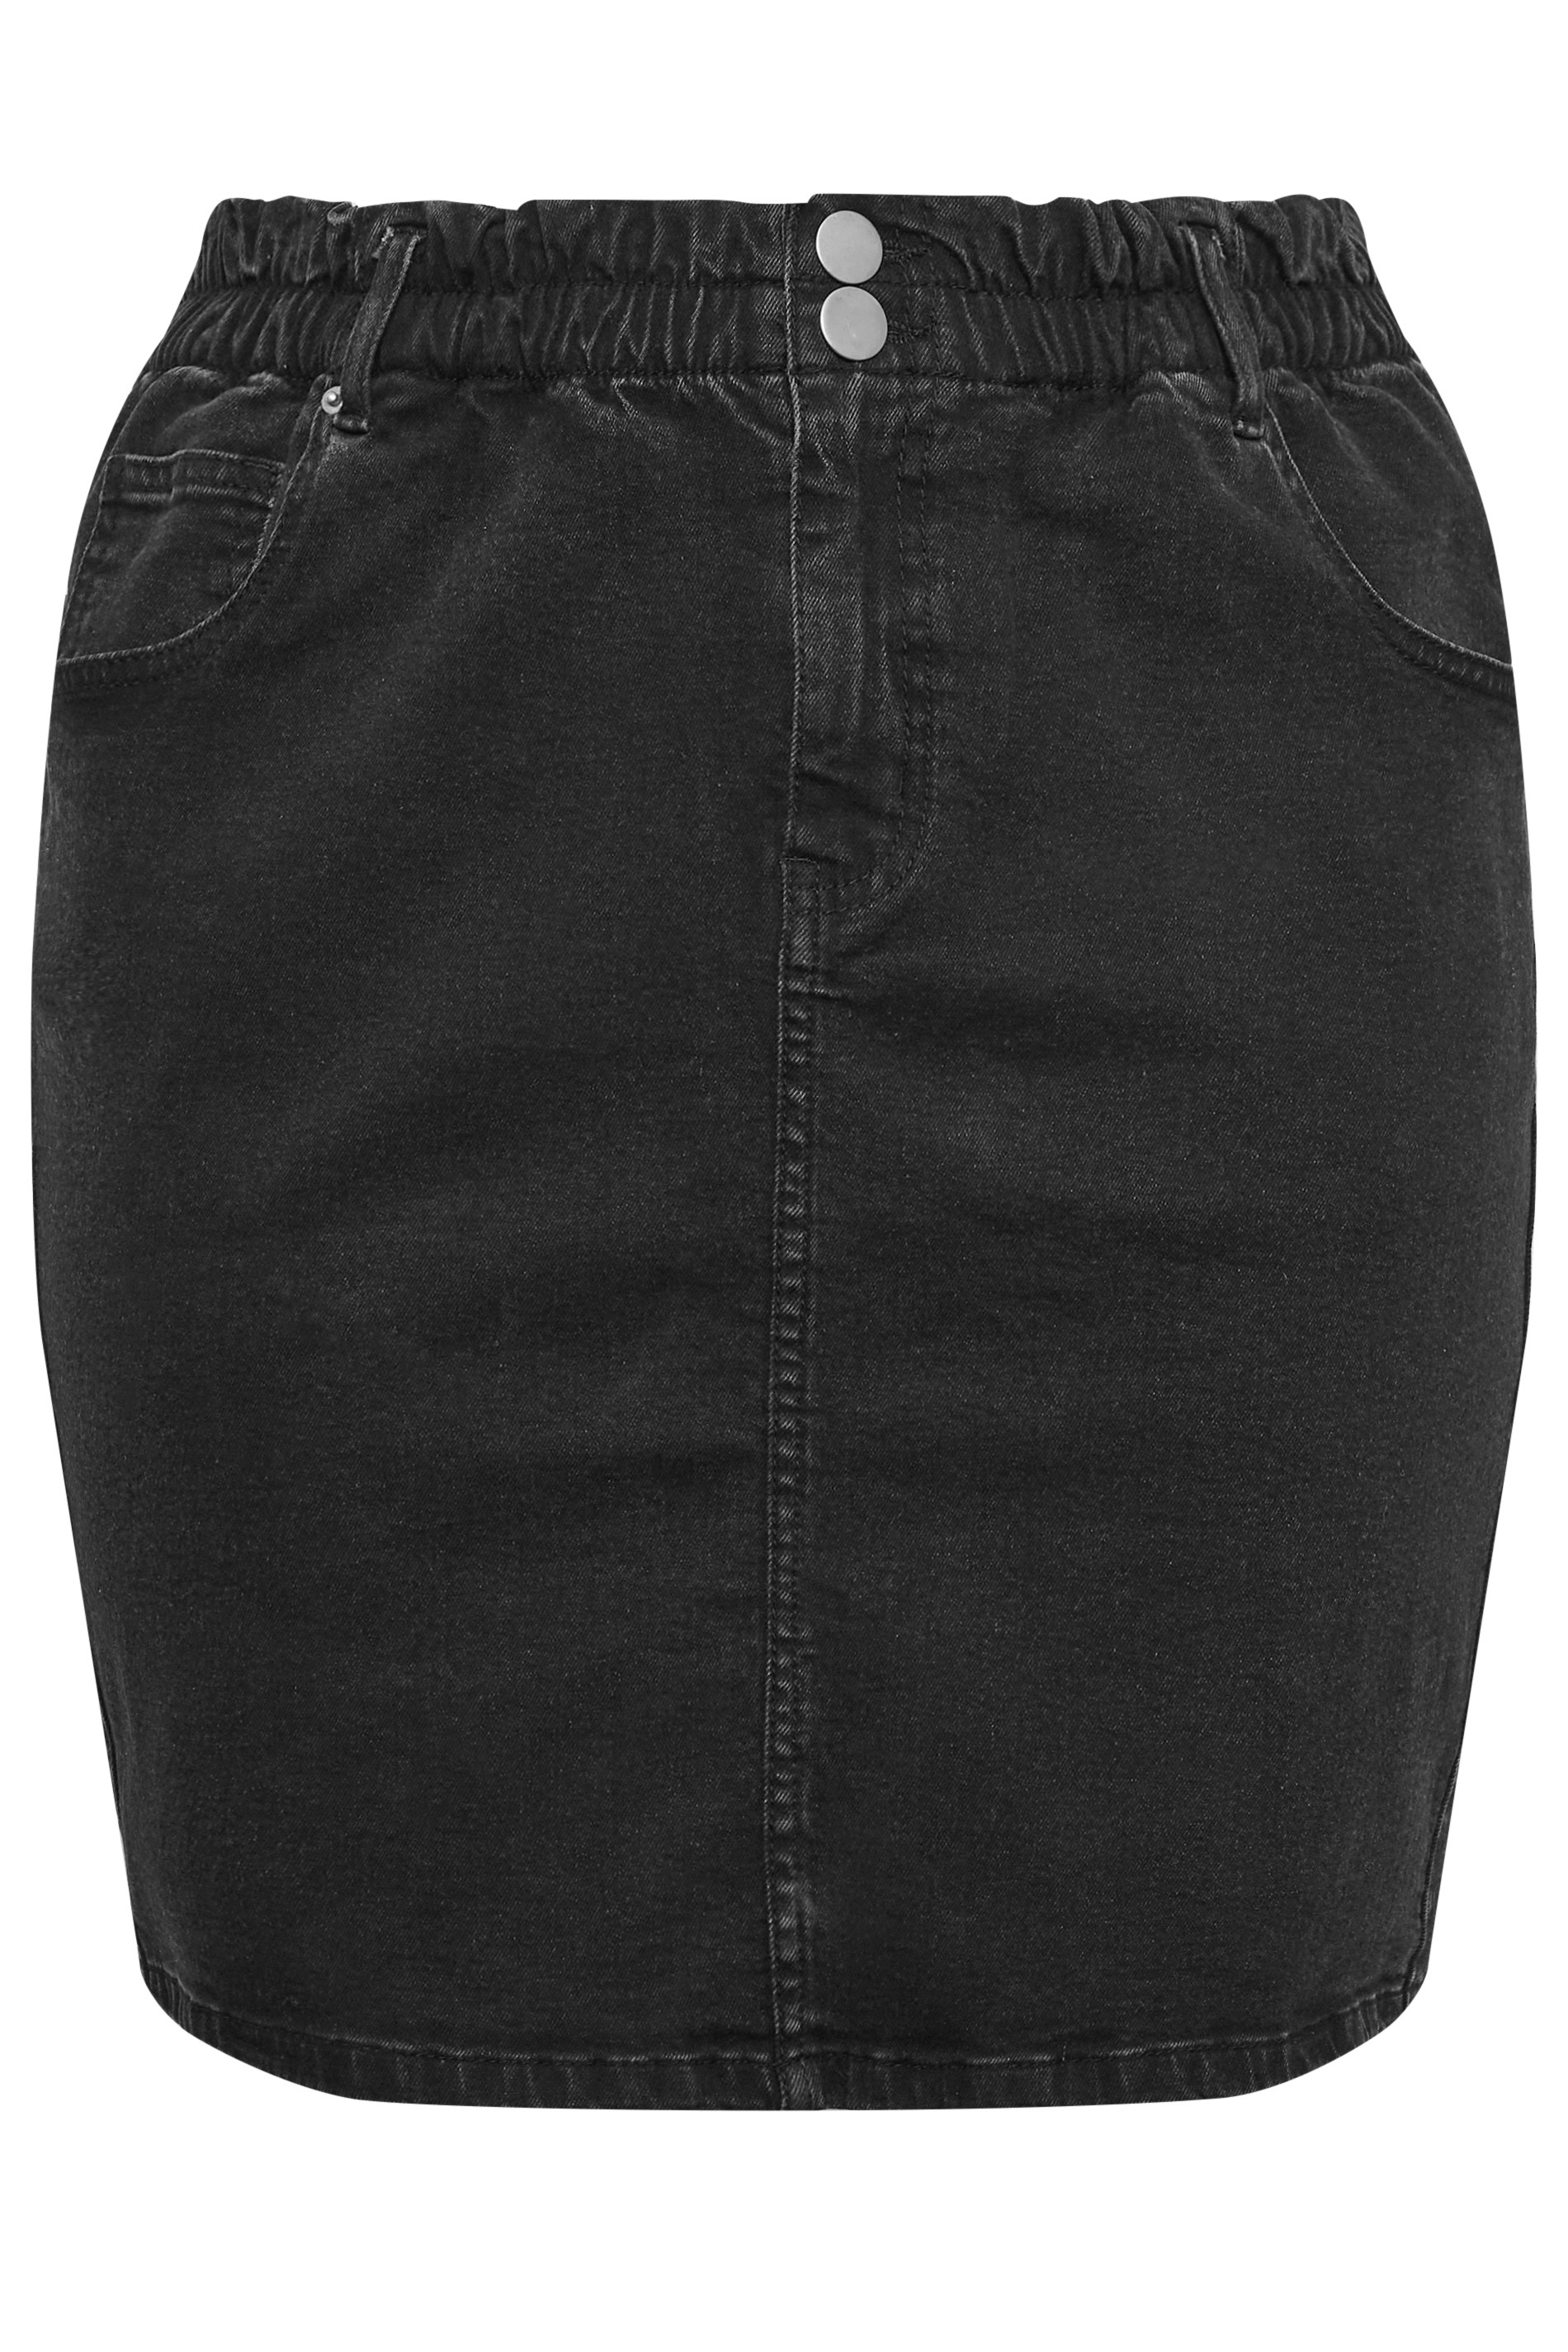 Yours Plus Size Black Elasticated Waist Denim Skirt Yours Clothing 